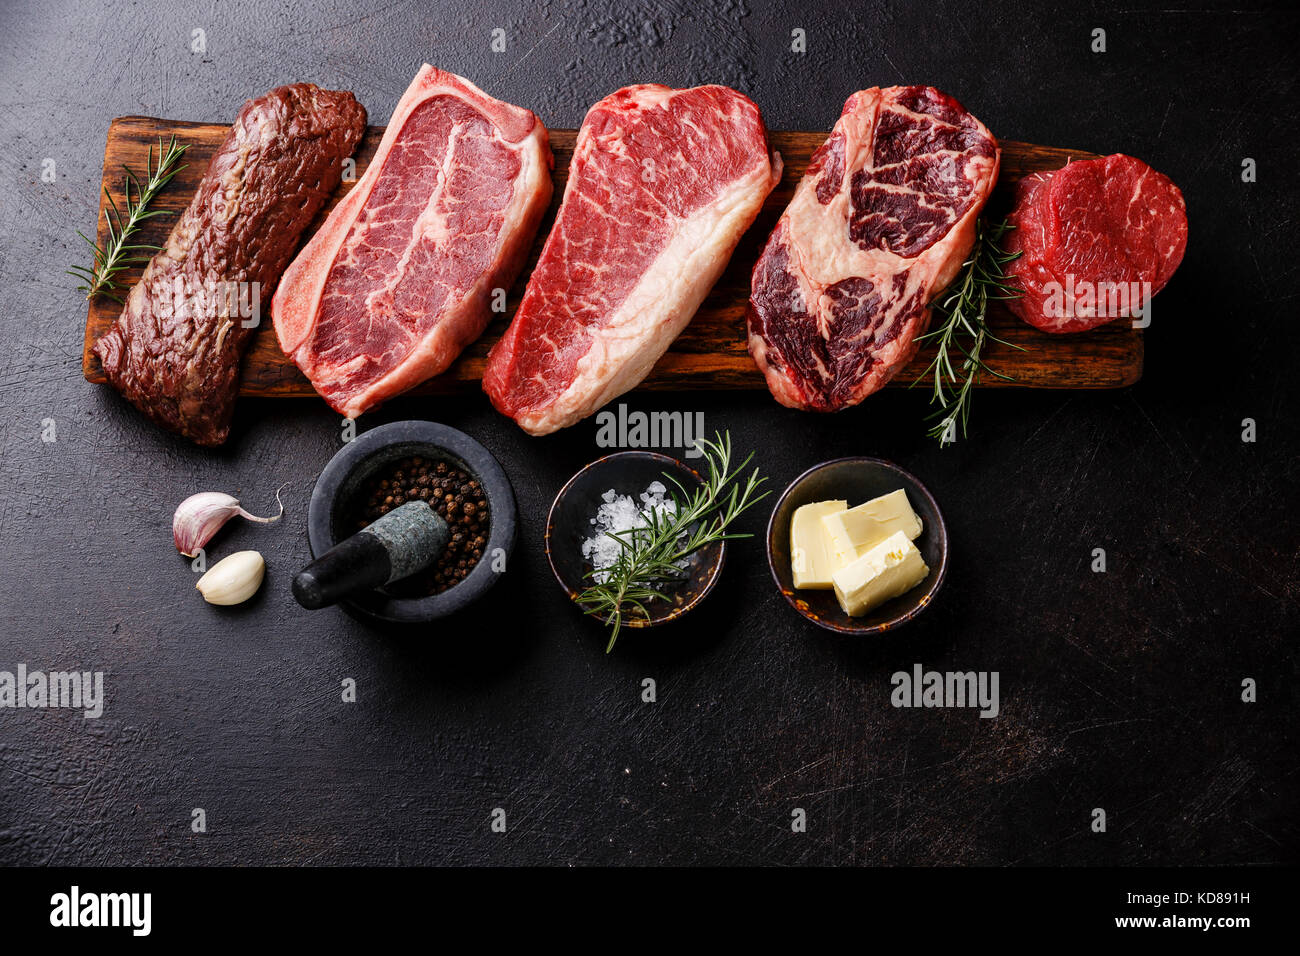 Variety of Raw Black Angus Prime meat steaks Machete, Blade on bone, Striploin, Rib eye, Tenderloin fillet mignon on wooden board and seasoning Stock Photo